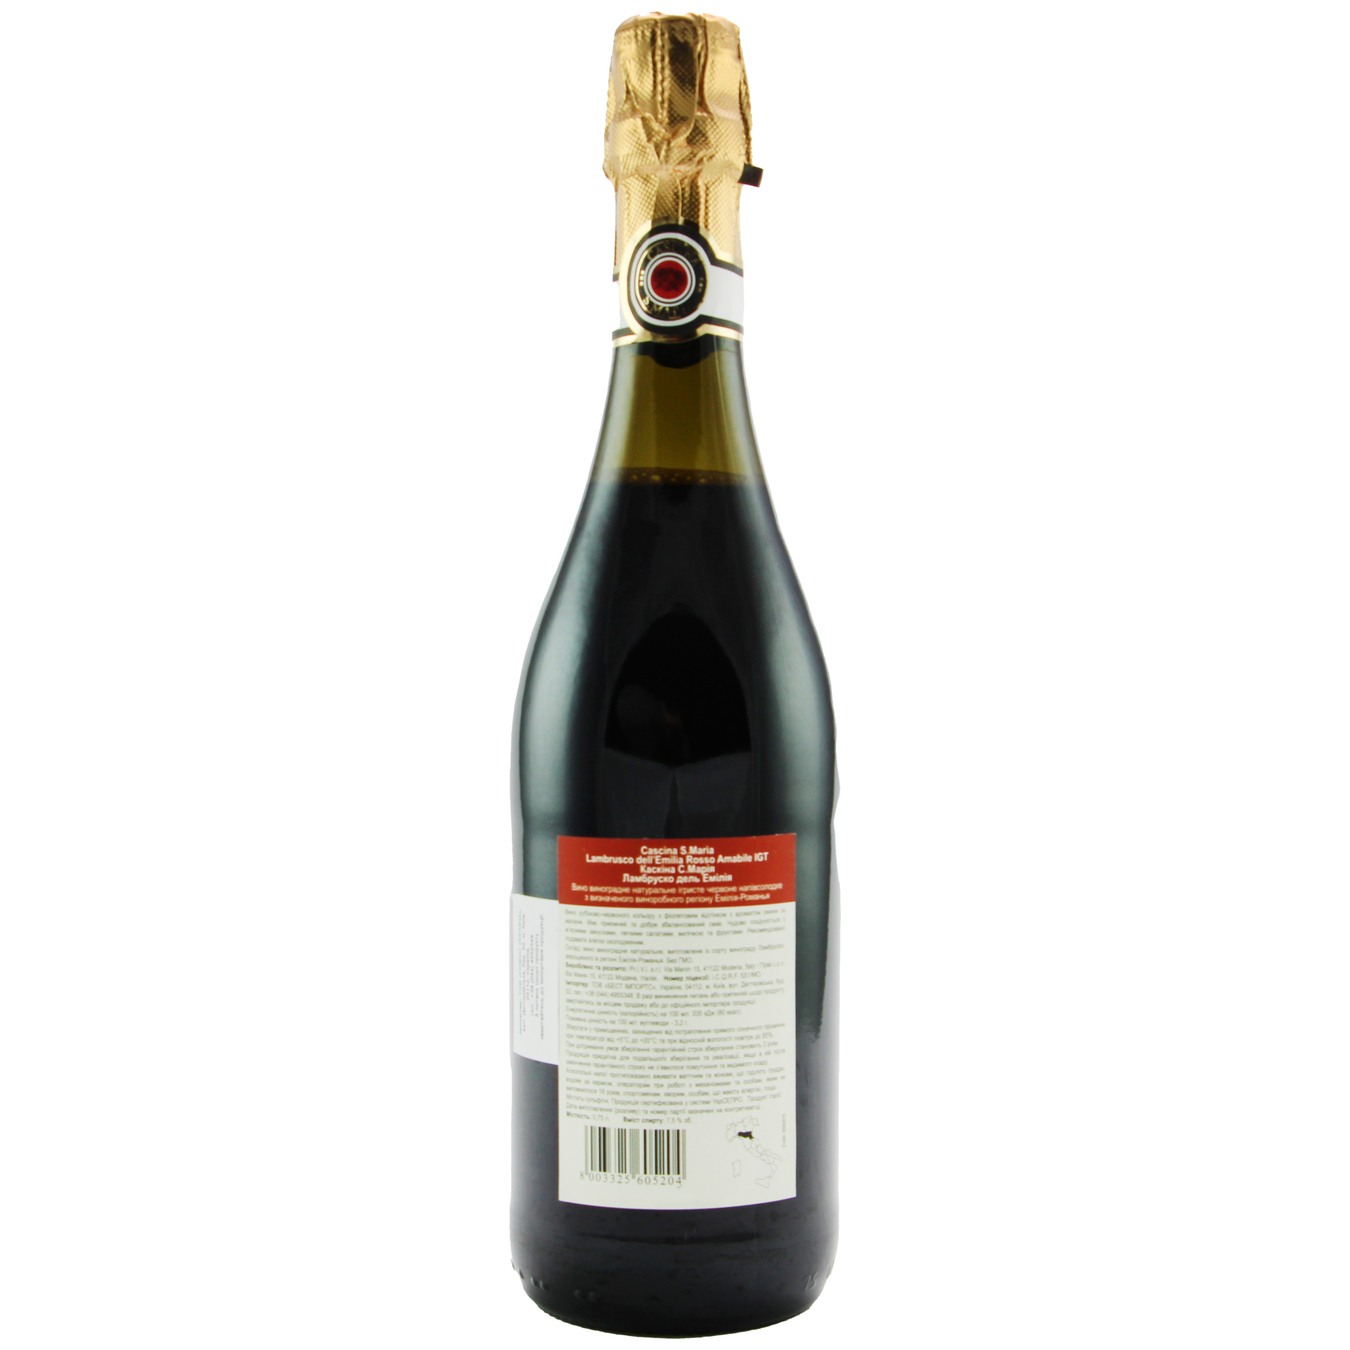 Вино Cascina S. Maria Rosso Amabile Lambrusco dell’Emilia игристое красное полусладкое 7,5% 0,75л 2